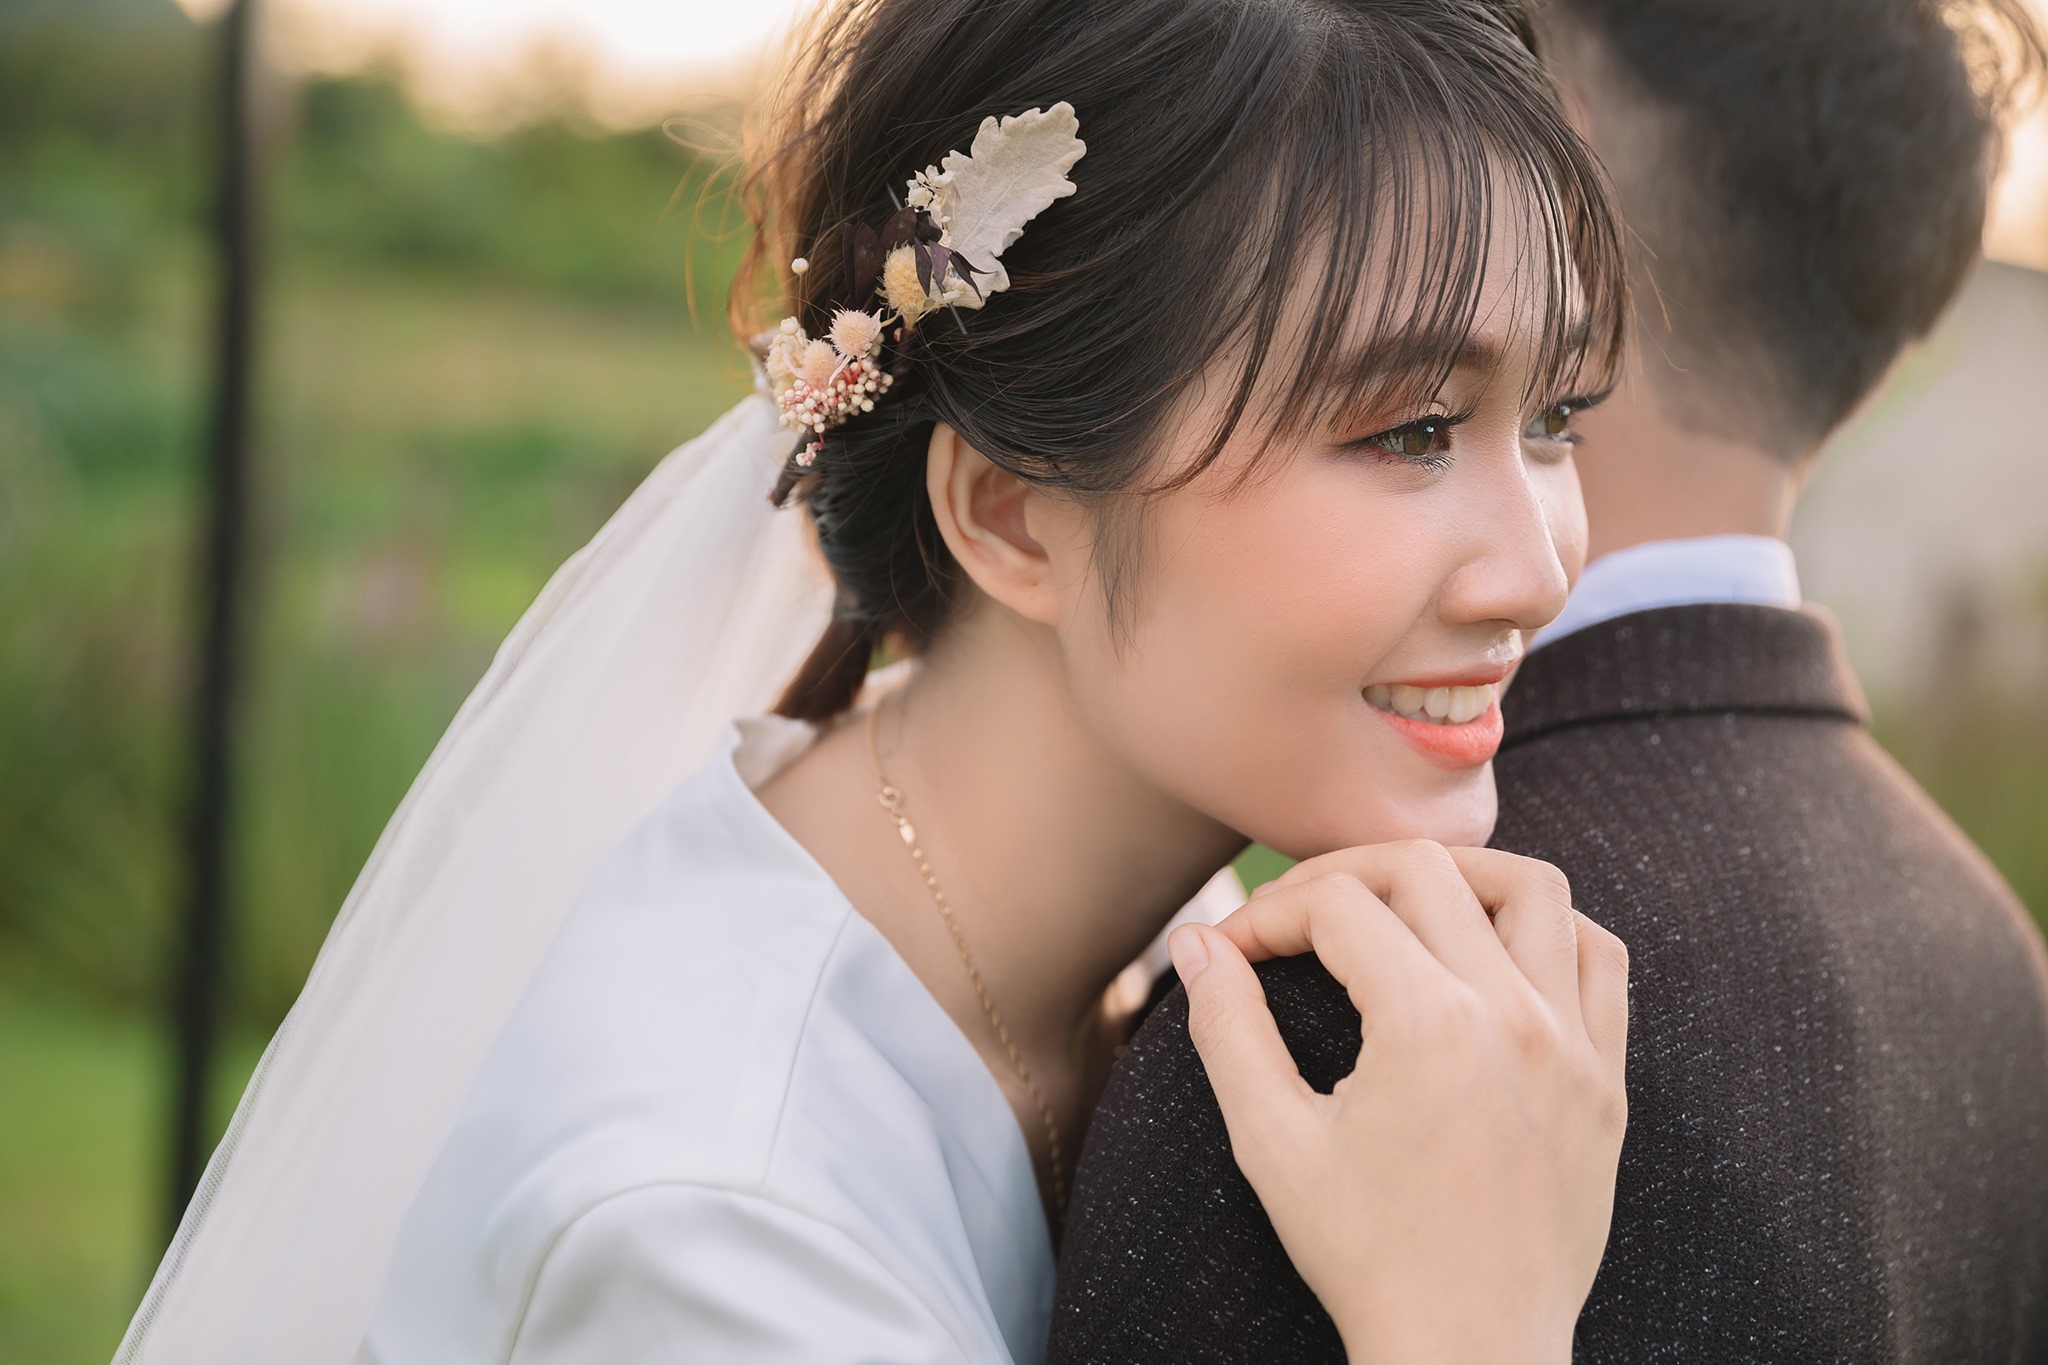 Son Studio - Photography Wedding - Buôn Ma Thuột﻿